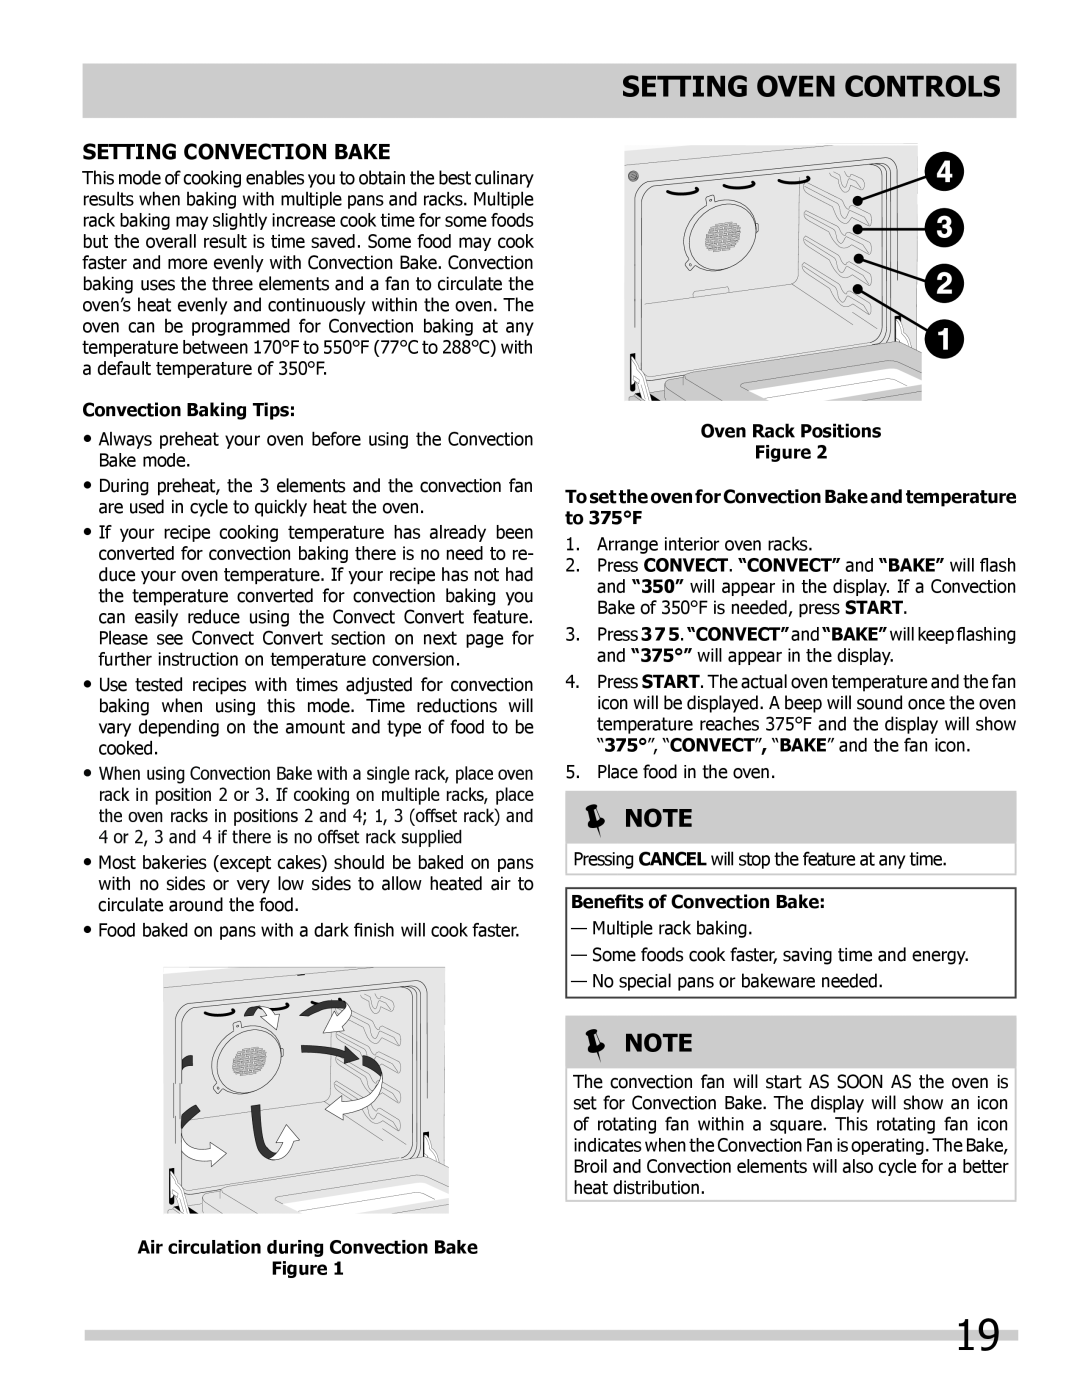 Frigidaire 318205854 manual Setting Convection Bake, Convection Baking Tips, Air circulation during Convection Bake,  Note 